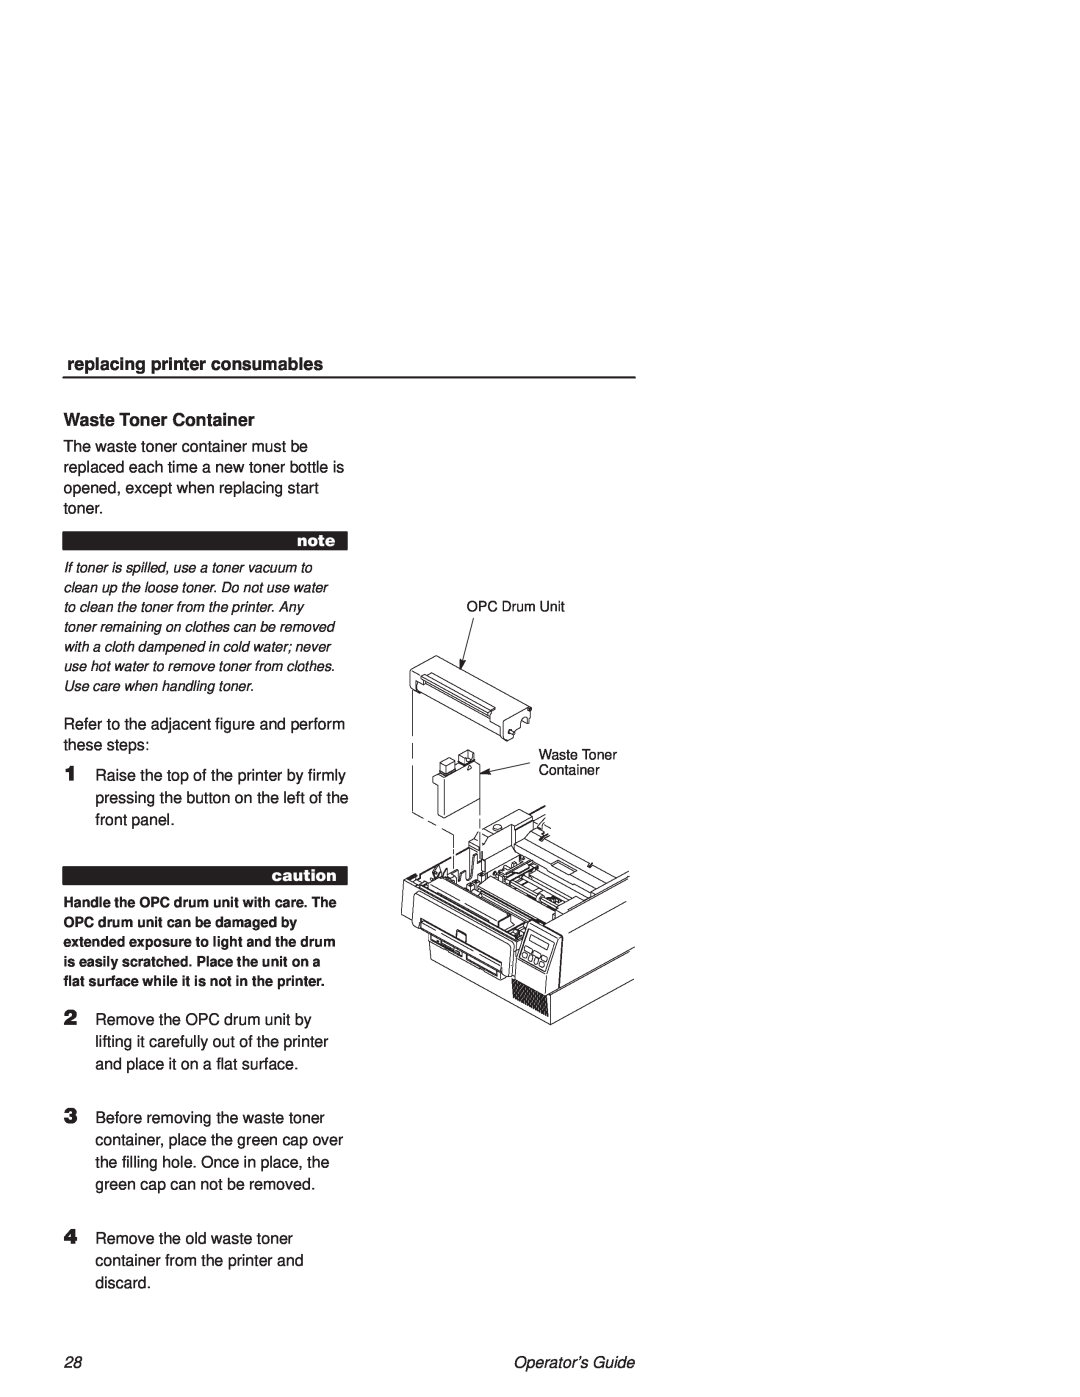 Printronix L1524 manual replacing printer consumables, OPC Drum Unit Waste Toner Container 